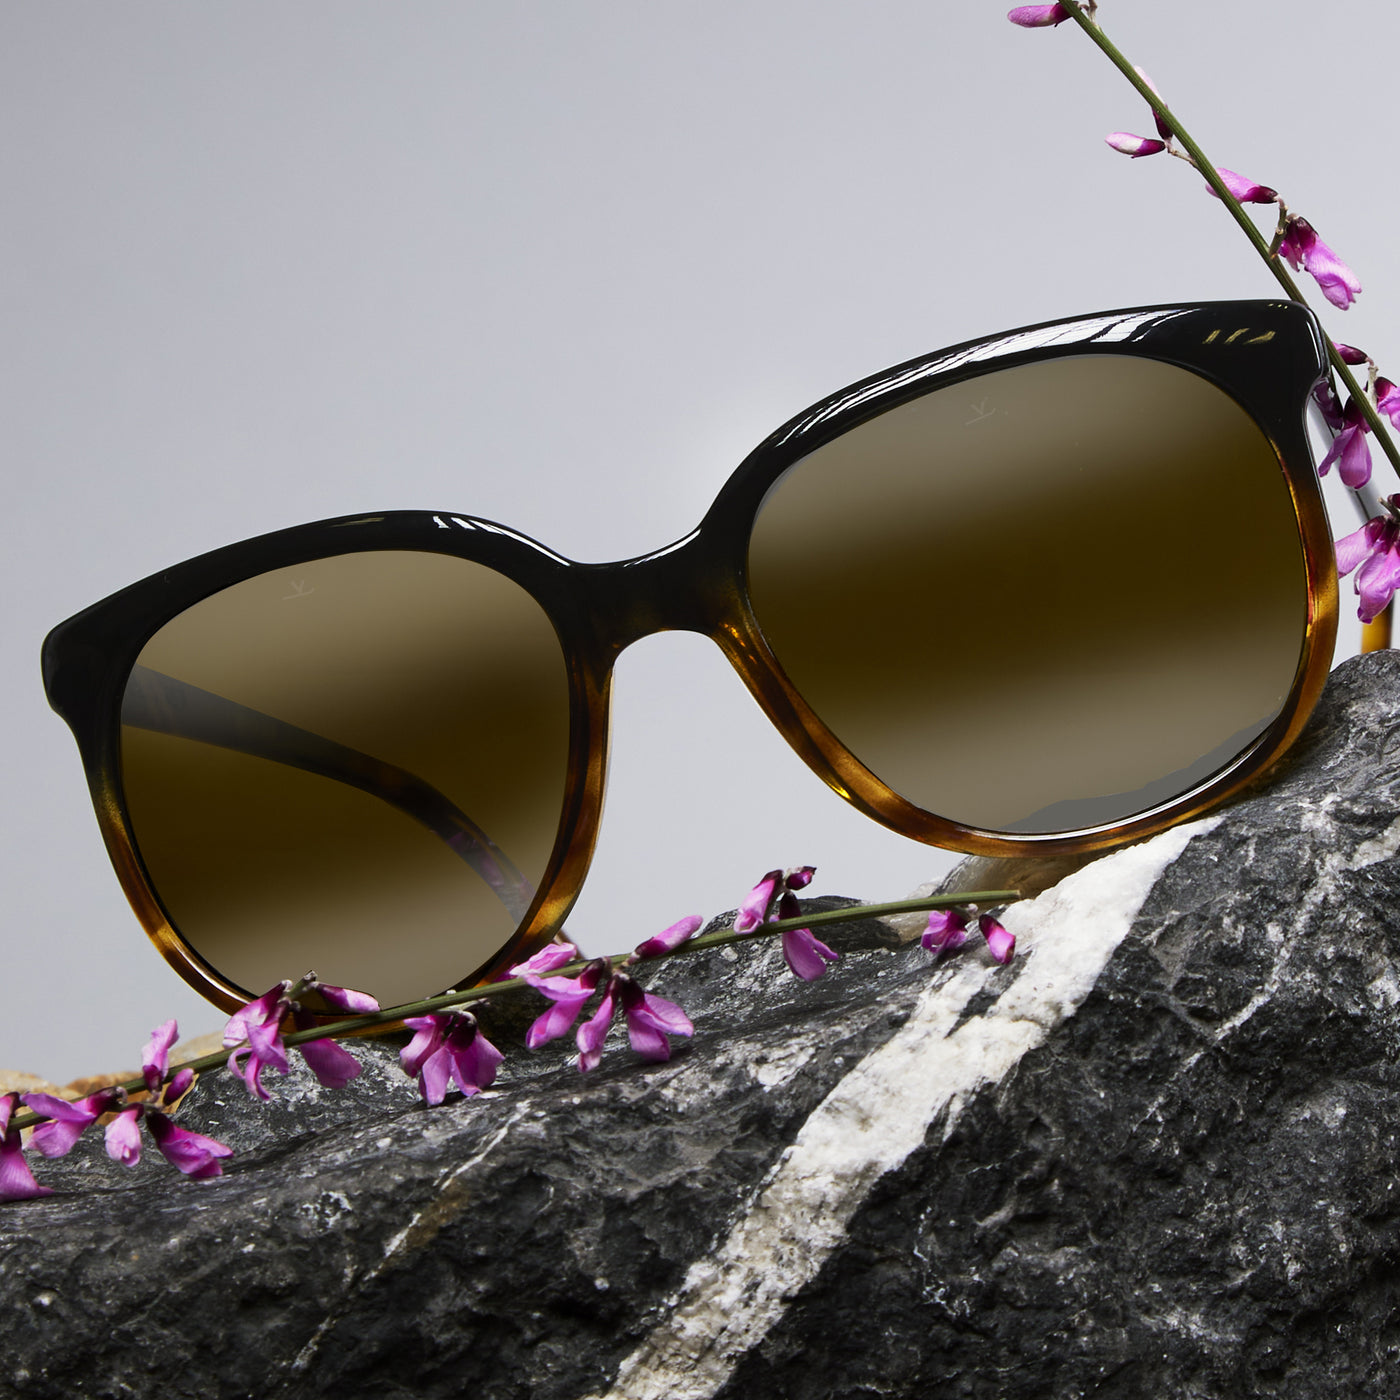 Sunglasses, Apparel & Skiwear. Made in France since 1957. – Vuarnet